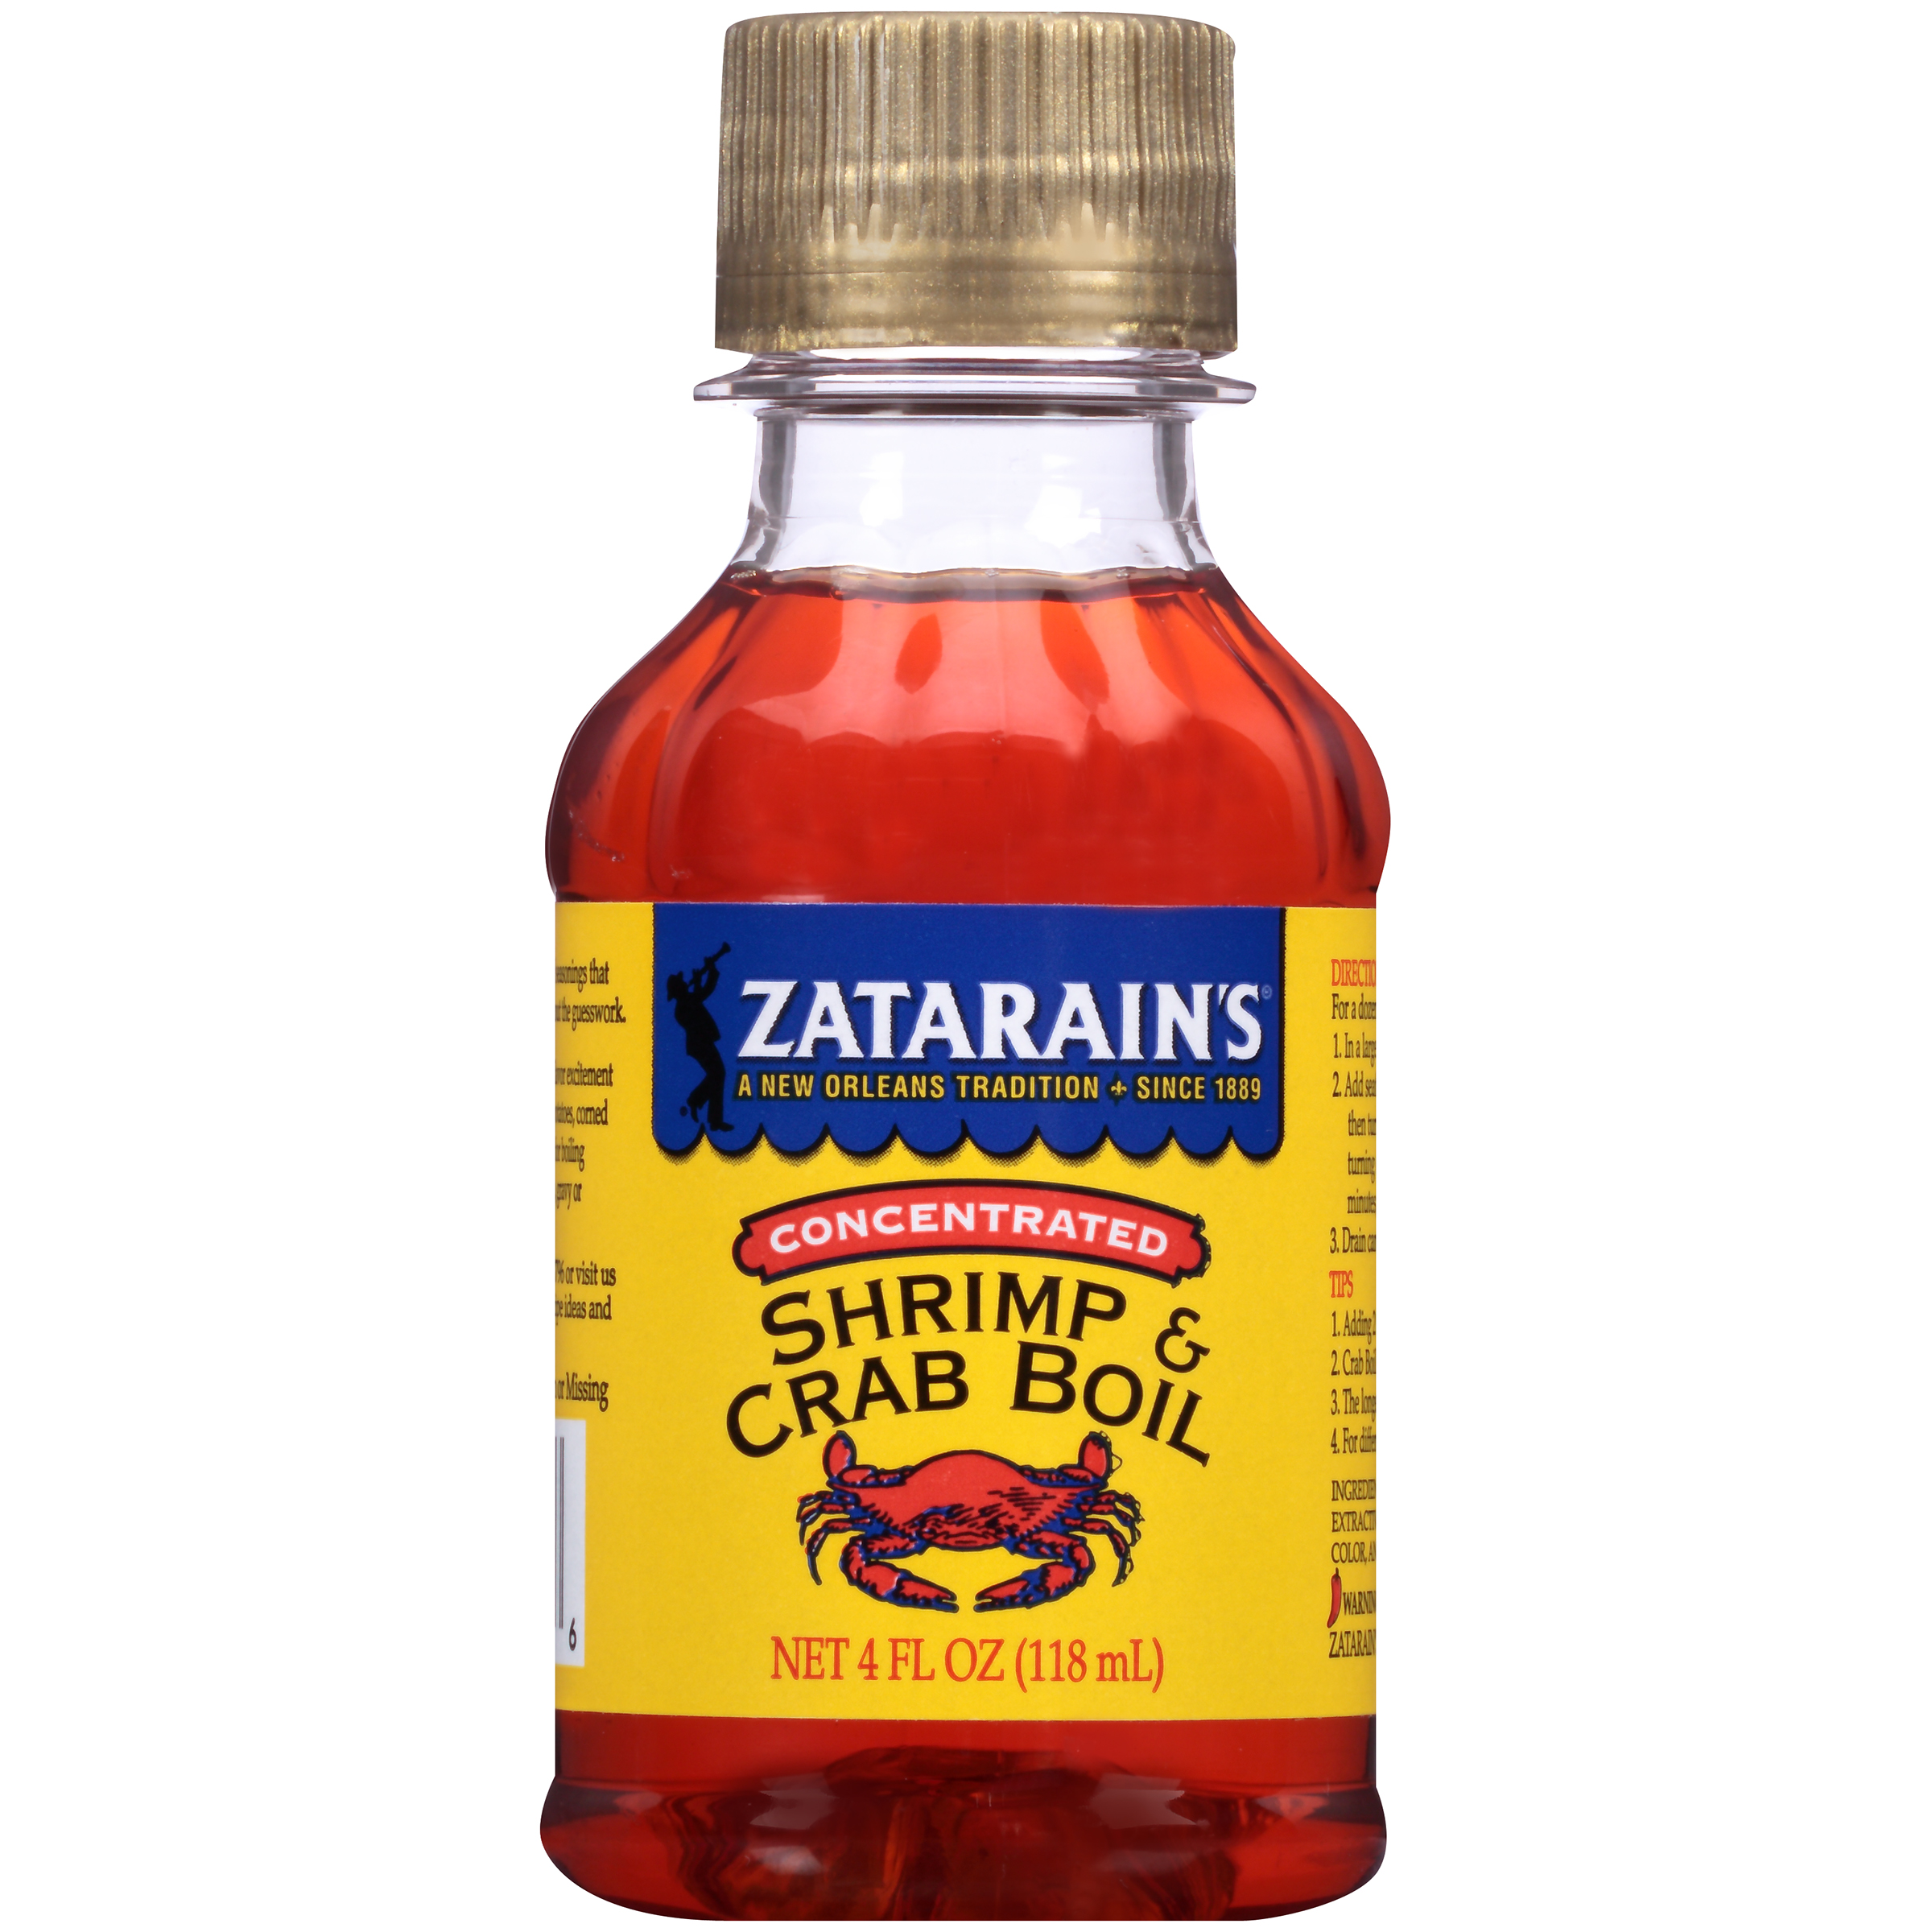 Zatarain's Shrimp and Crab Boil, Concentrated, 4 fl oz (118 ml)